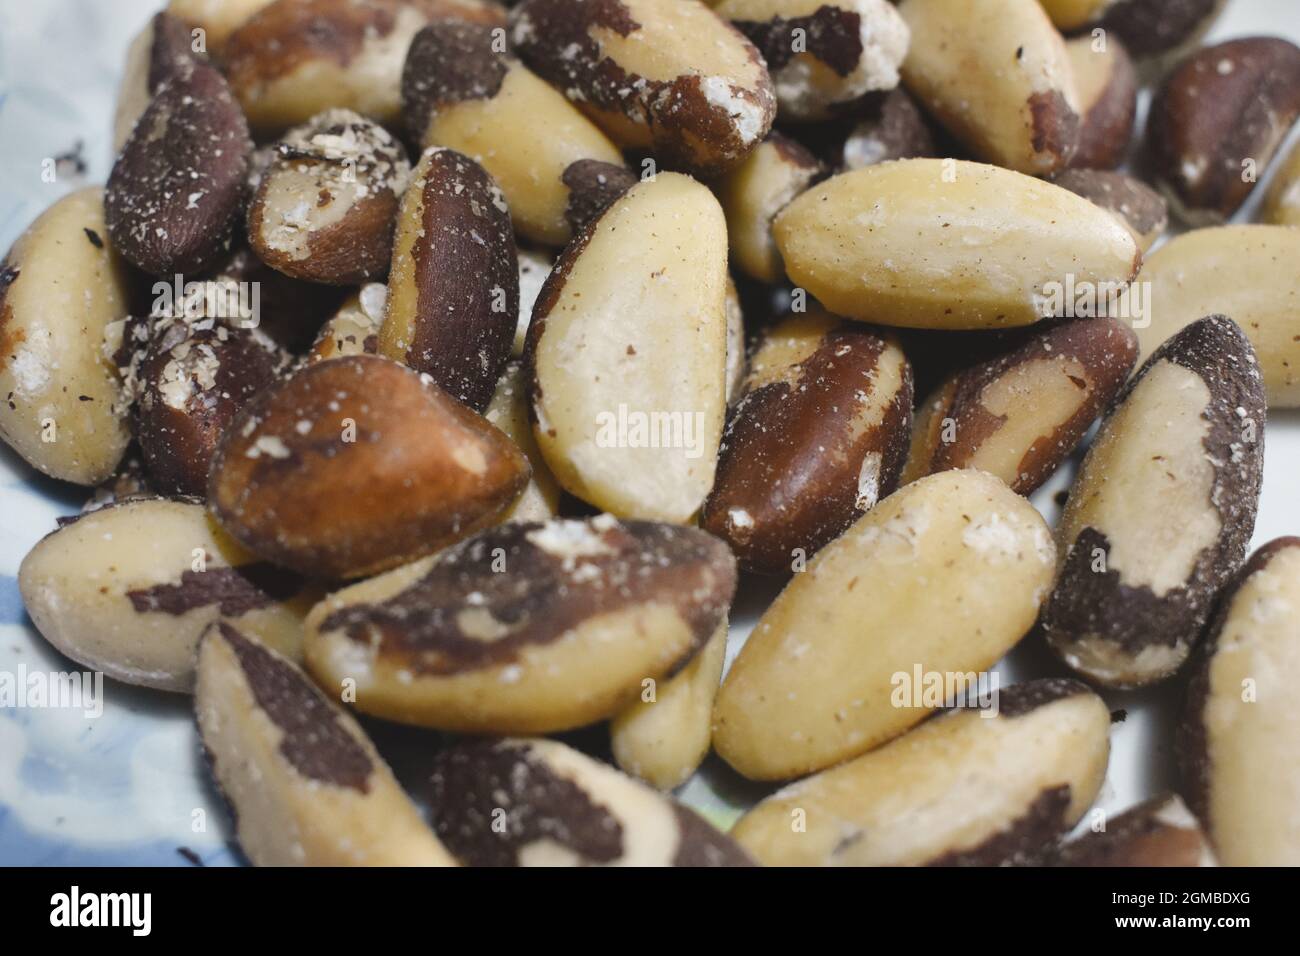 Brazil nuts close up shot Stock Photo